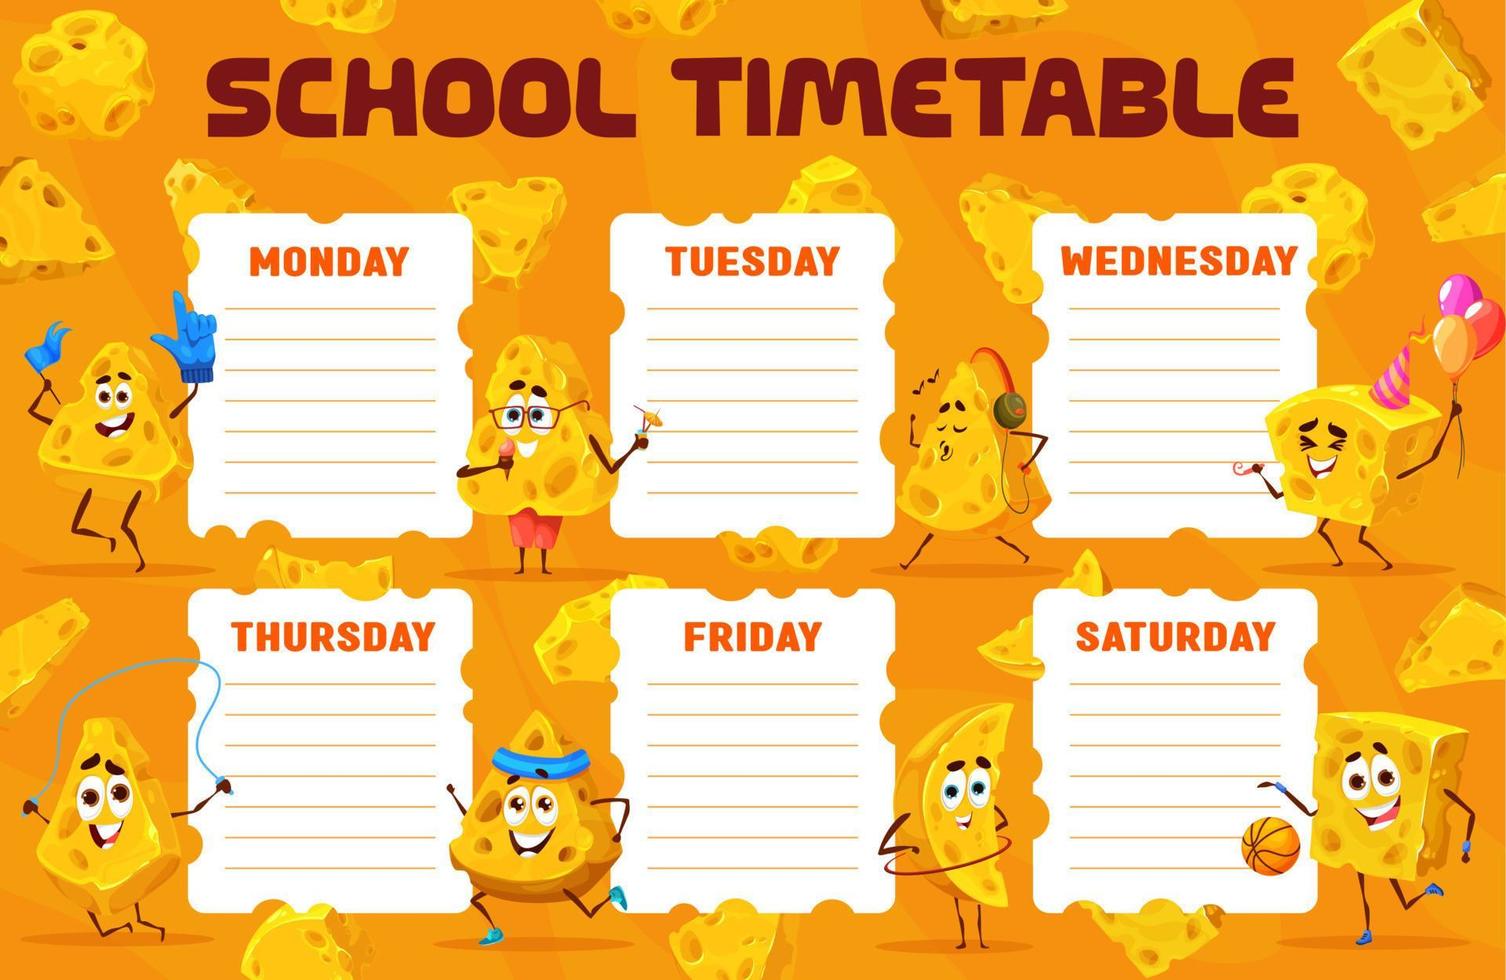 Timetable schedule cartoon maasdam or gouda cheese vector